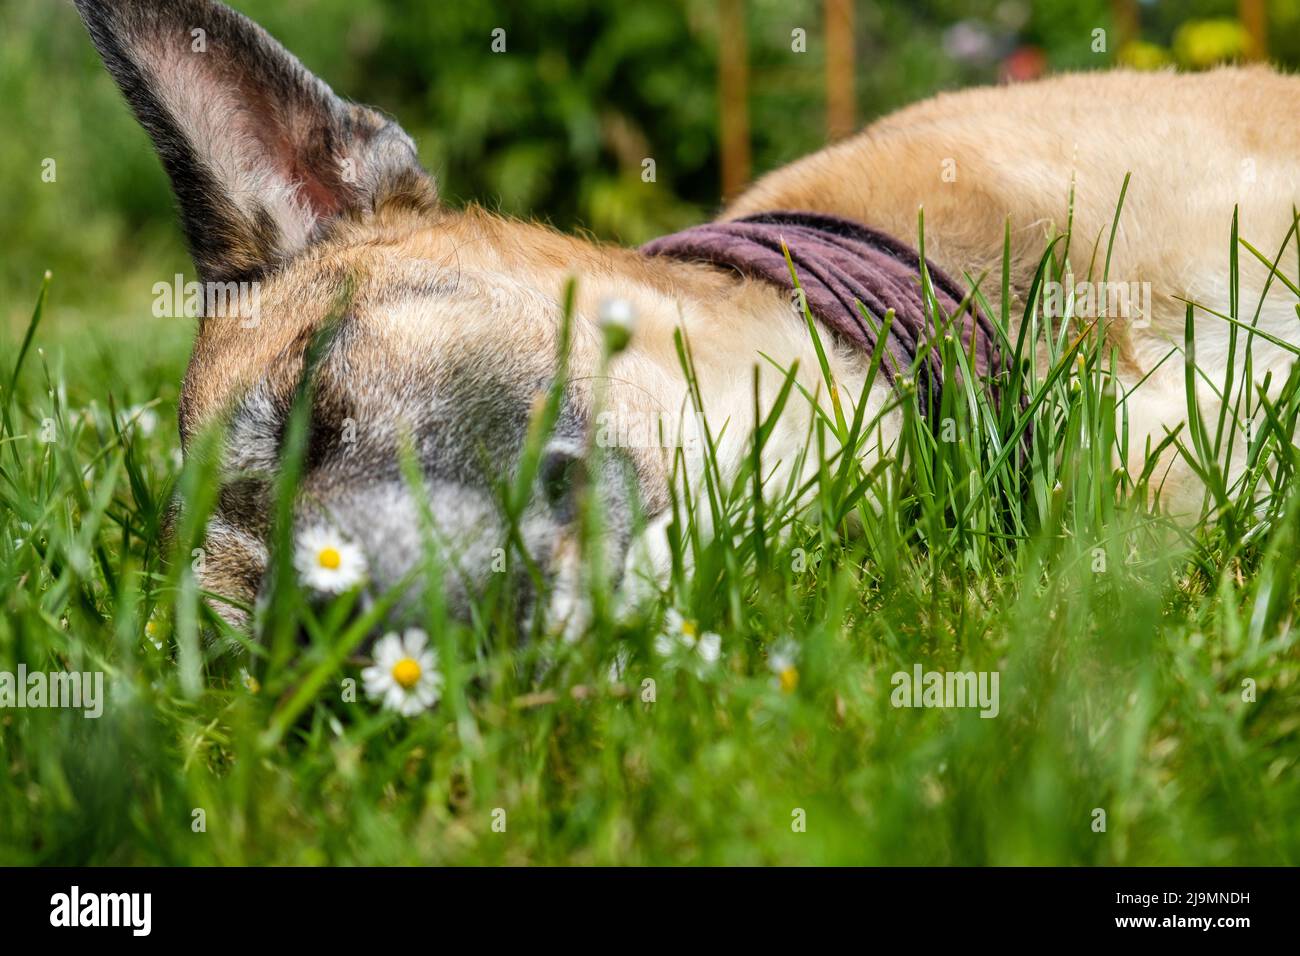 Dog asleep in the grass | Chien batard endormi sur le gazon d'un jardin  Stock Photo - Alamy